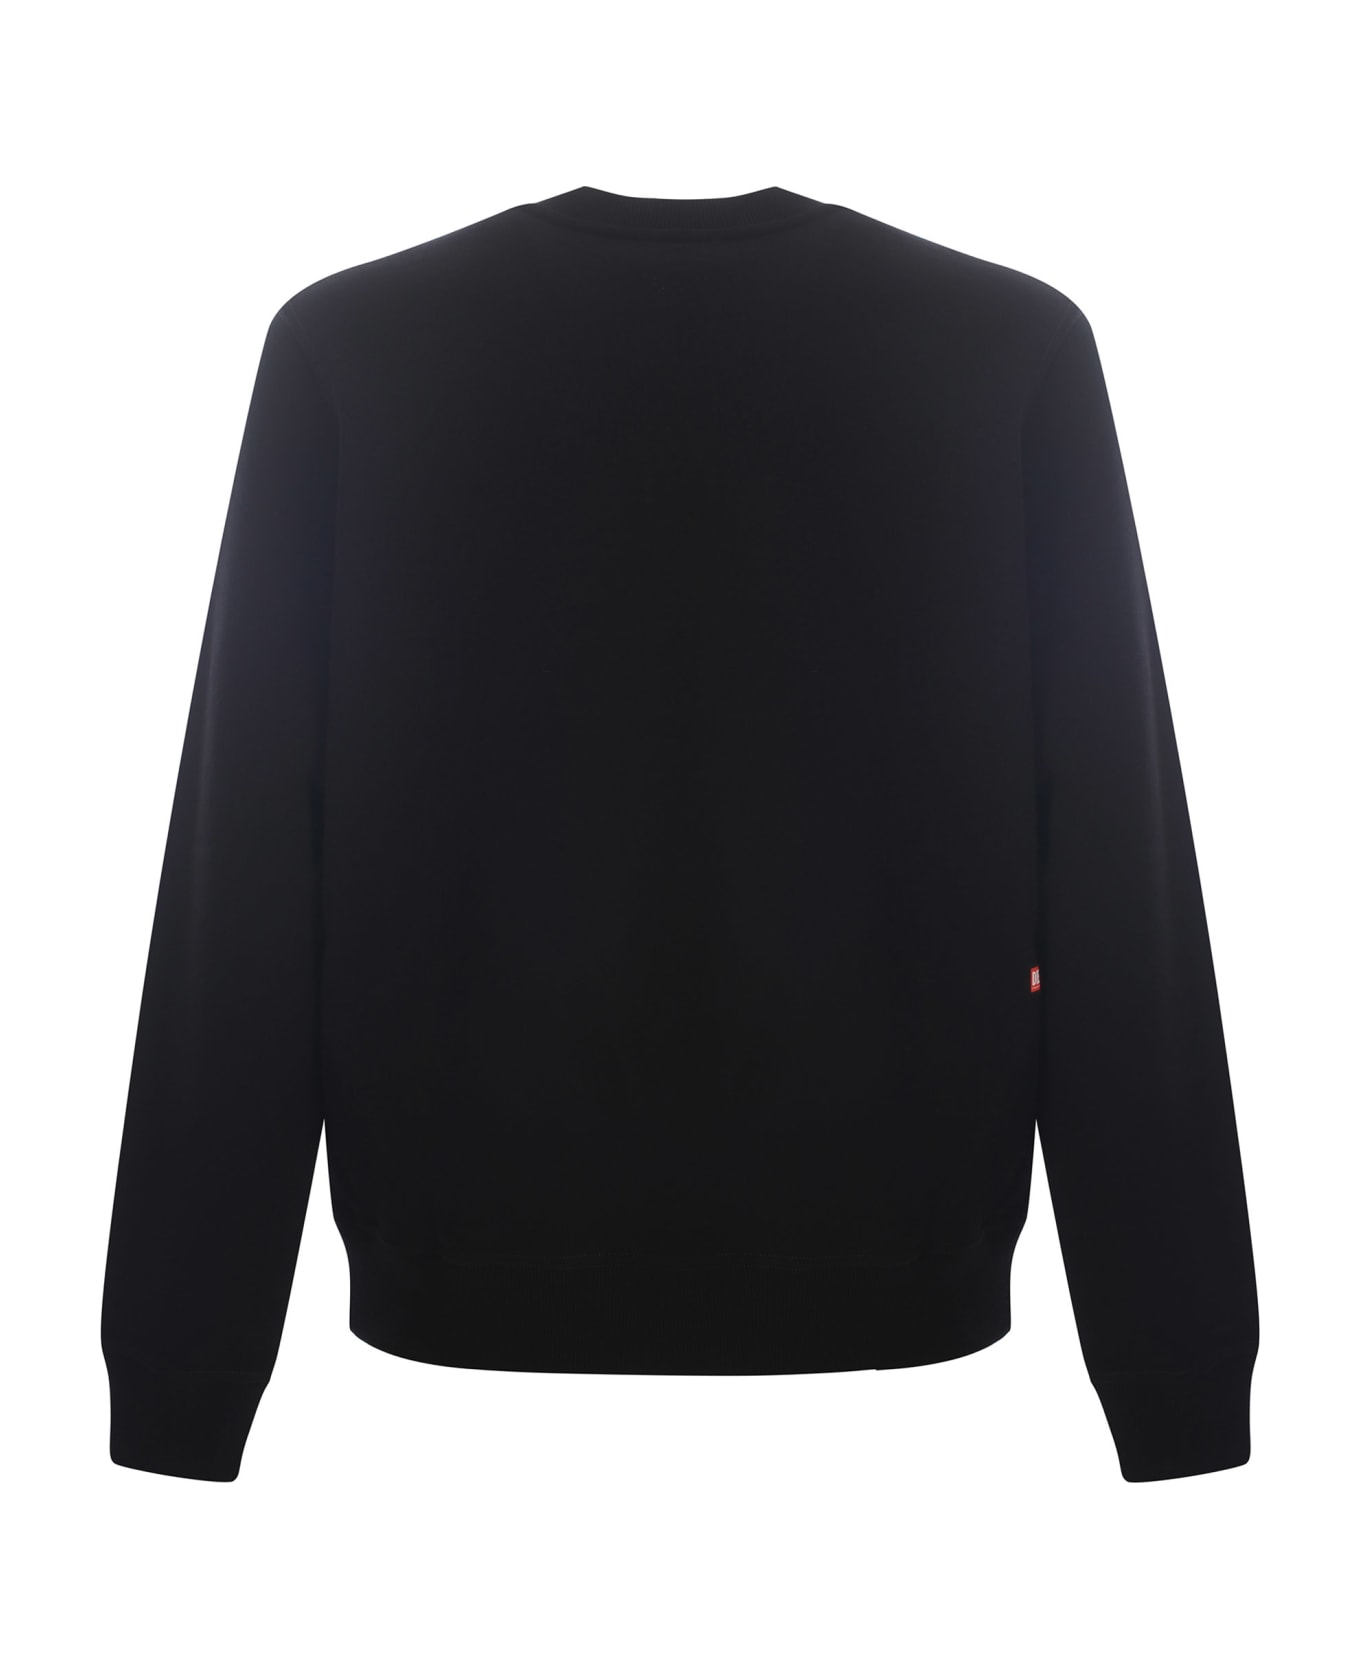 Diesel S-ginn N1 Sweatshirt - Xx Black フリース